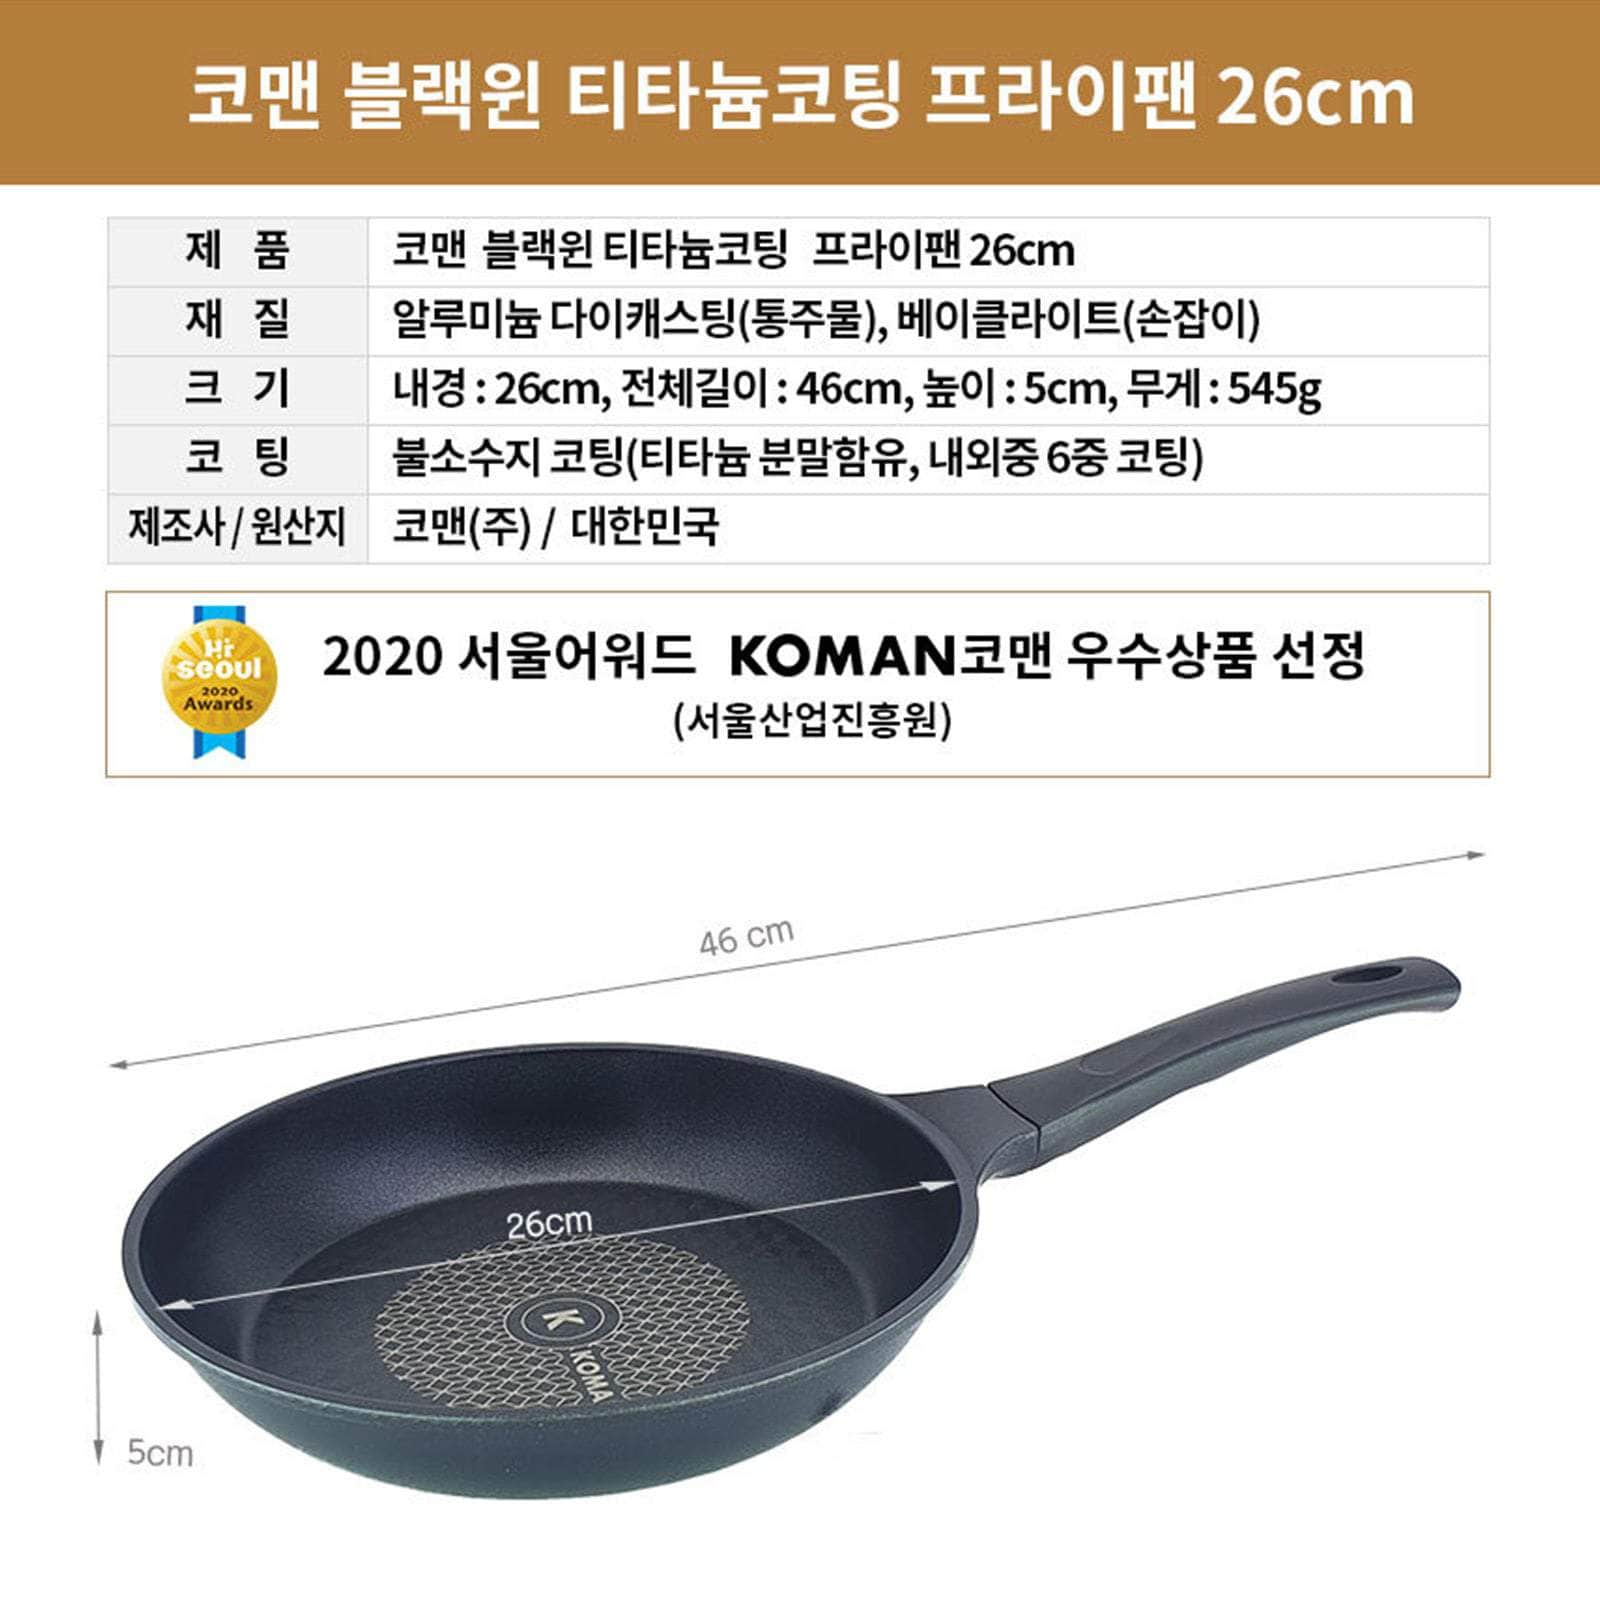 26Cm Titanium Coating Frying Pan Non-Stick + Glass Lid